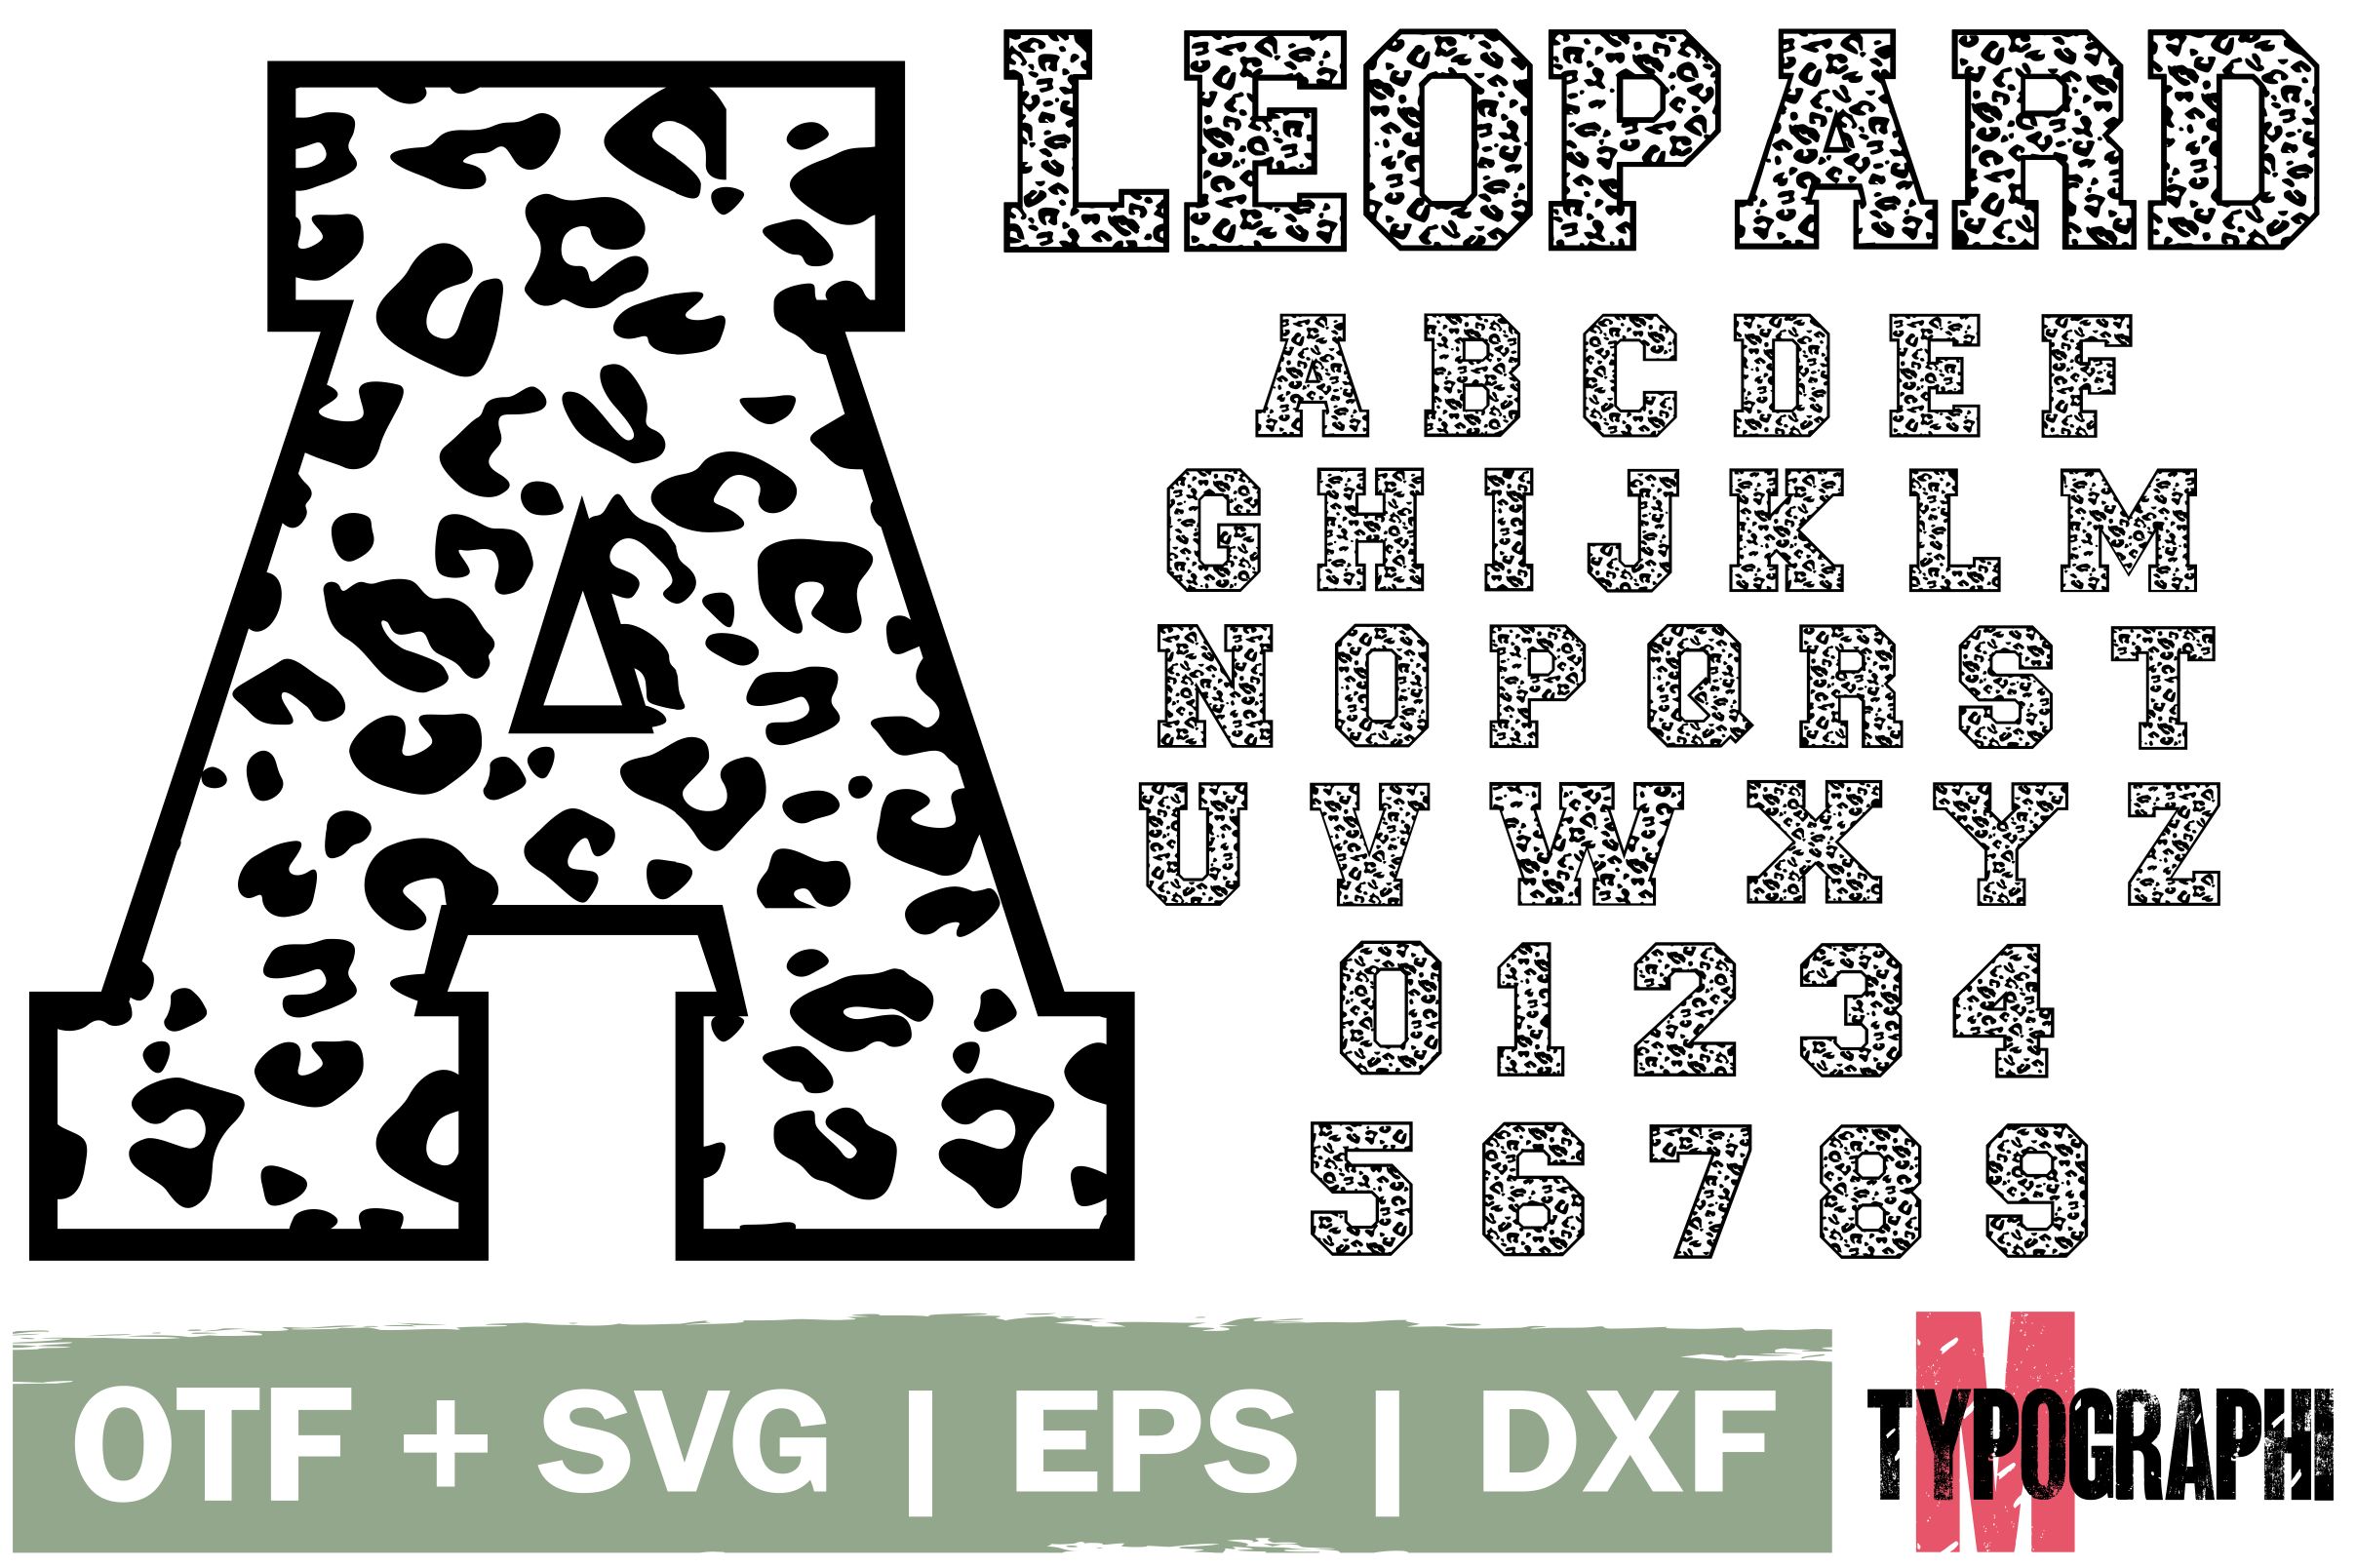 Leopard Print Letters Svg Free